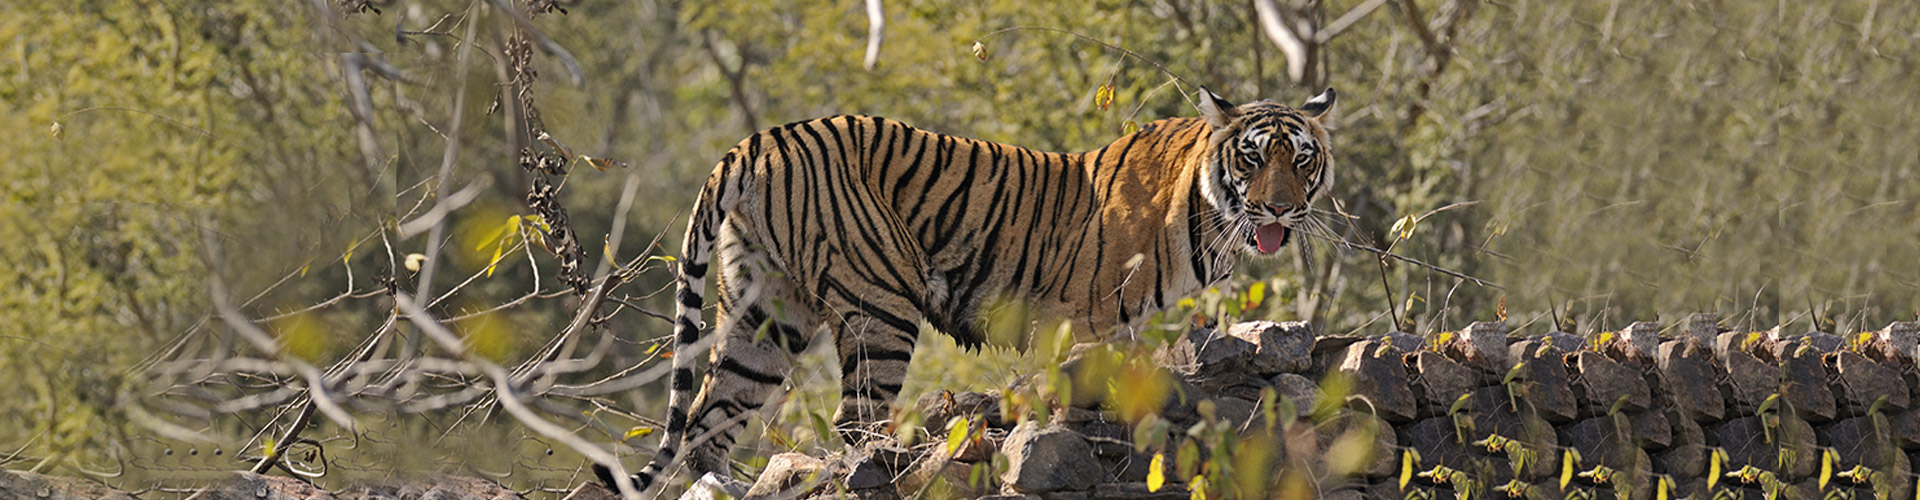 tigers image3